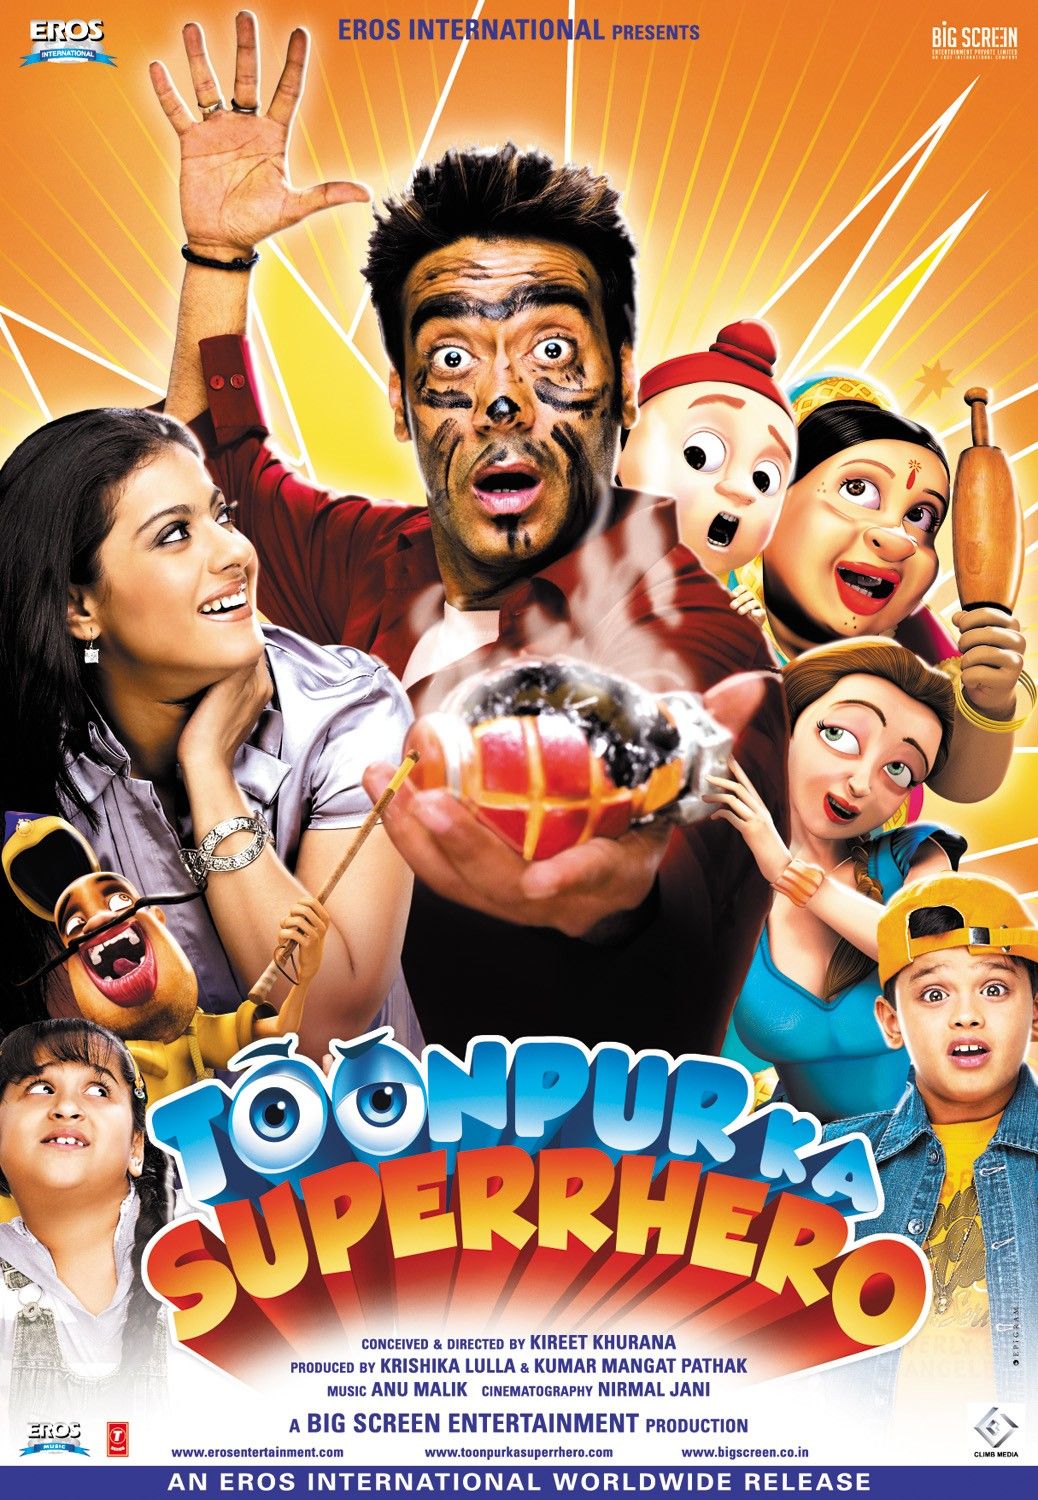 Extra Large Movie Poster Image for Toonpur Ka Superhero (#2 of 4)